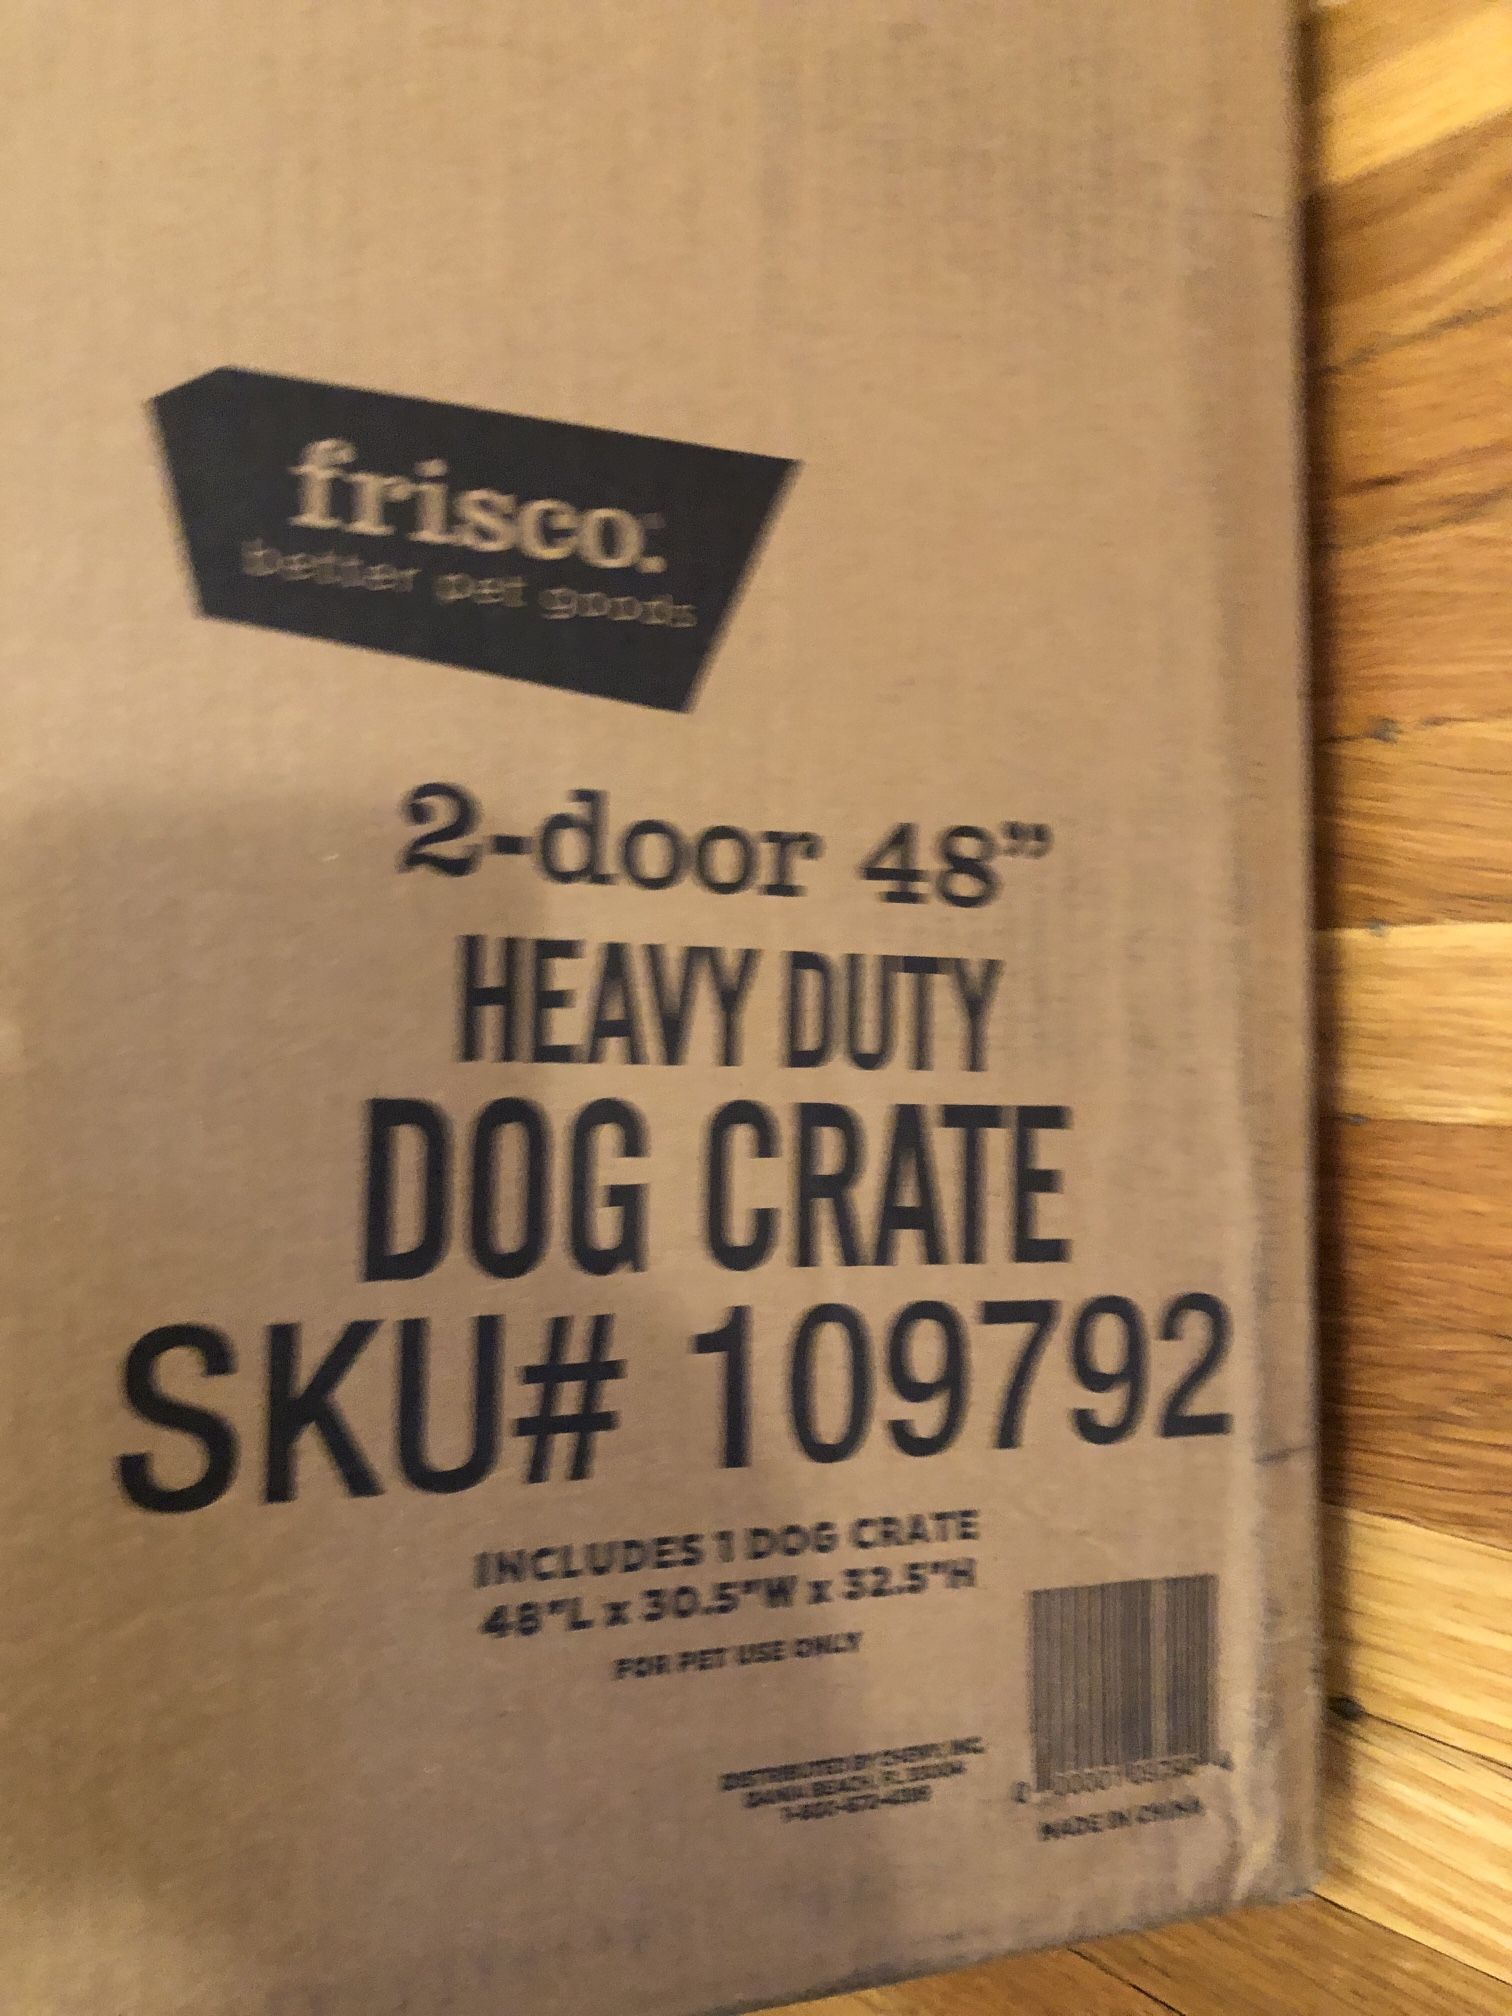 XL Dog Crate - 48”